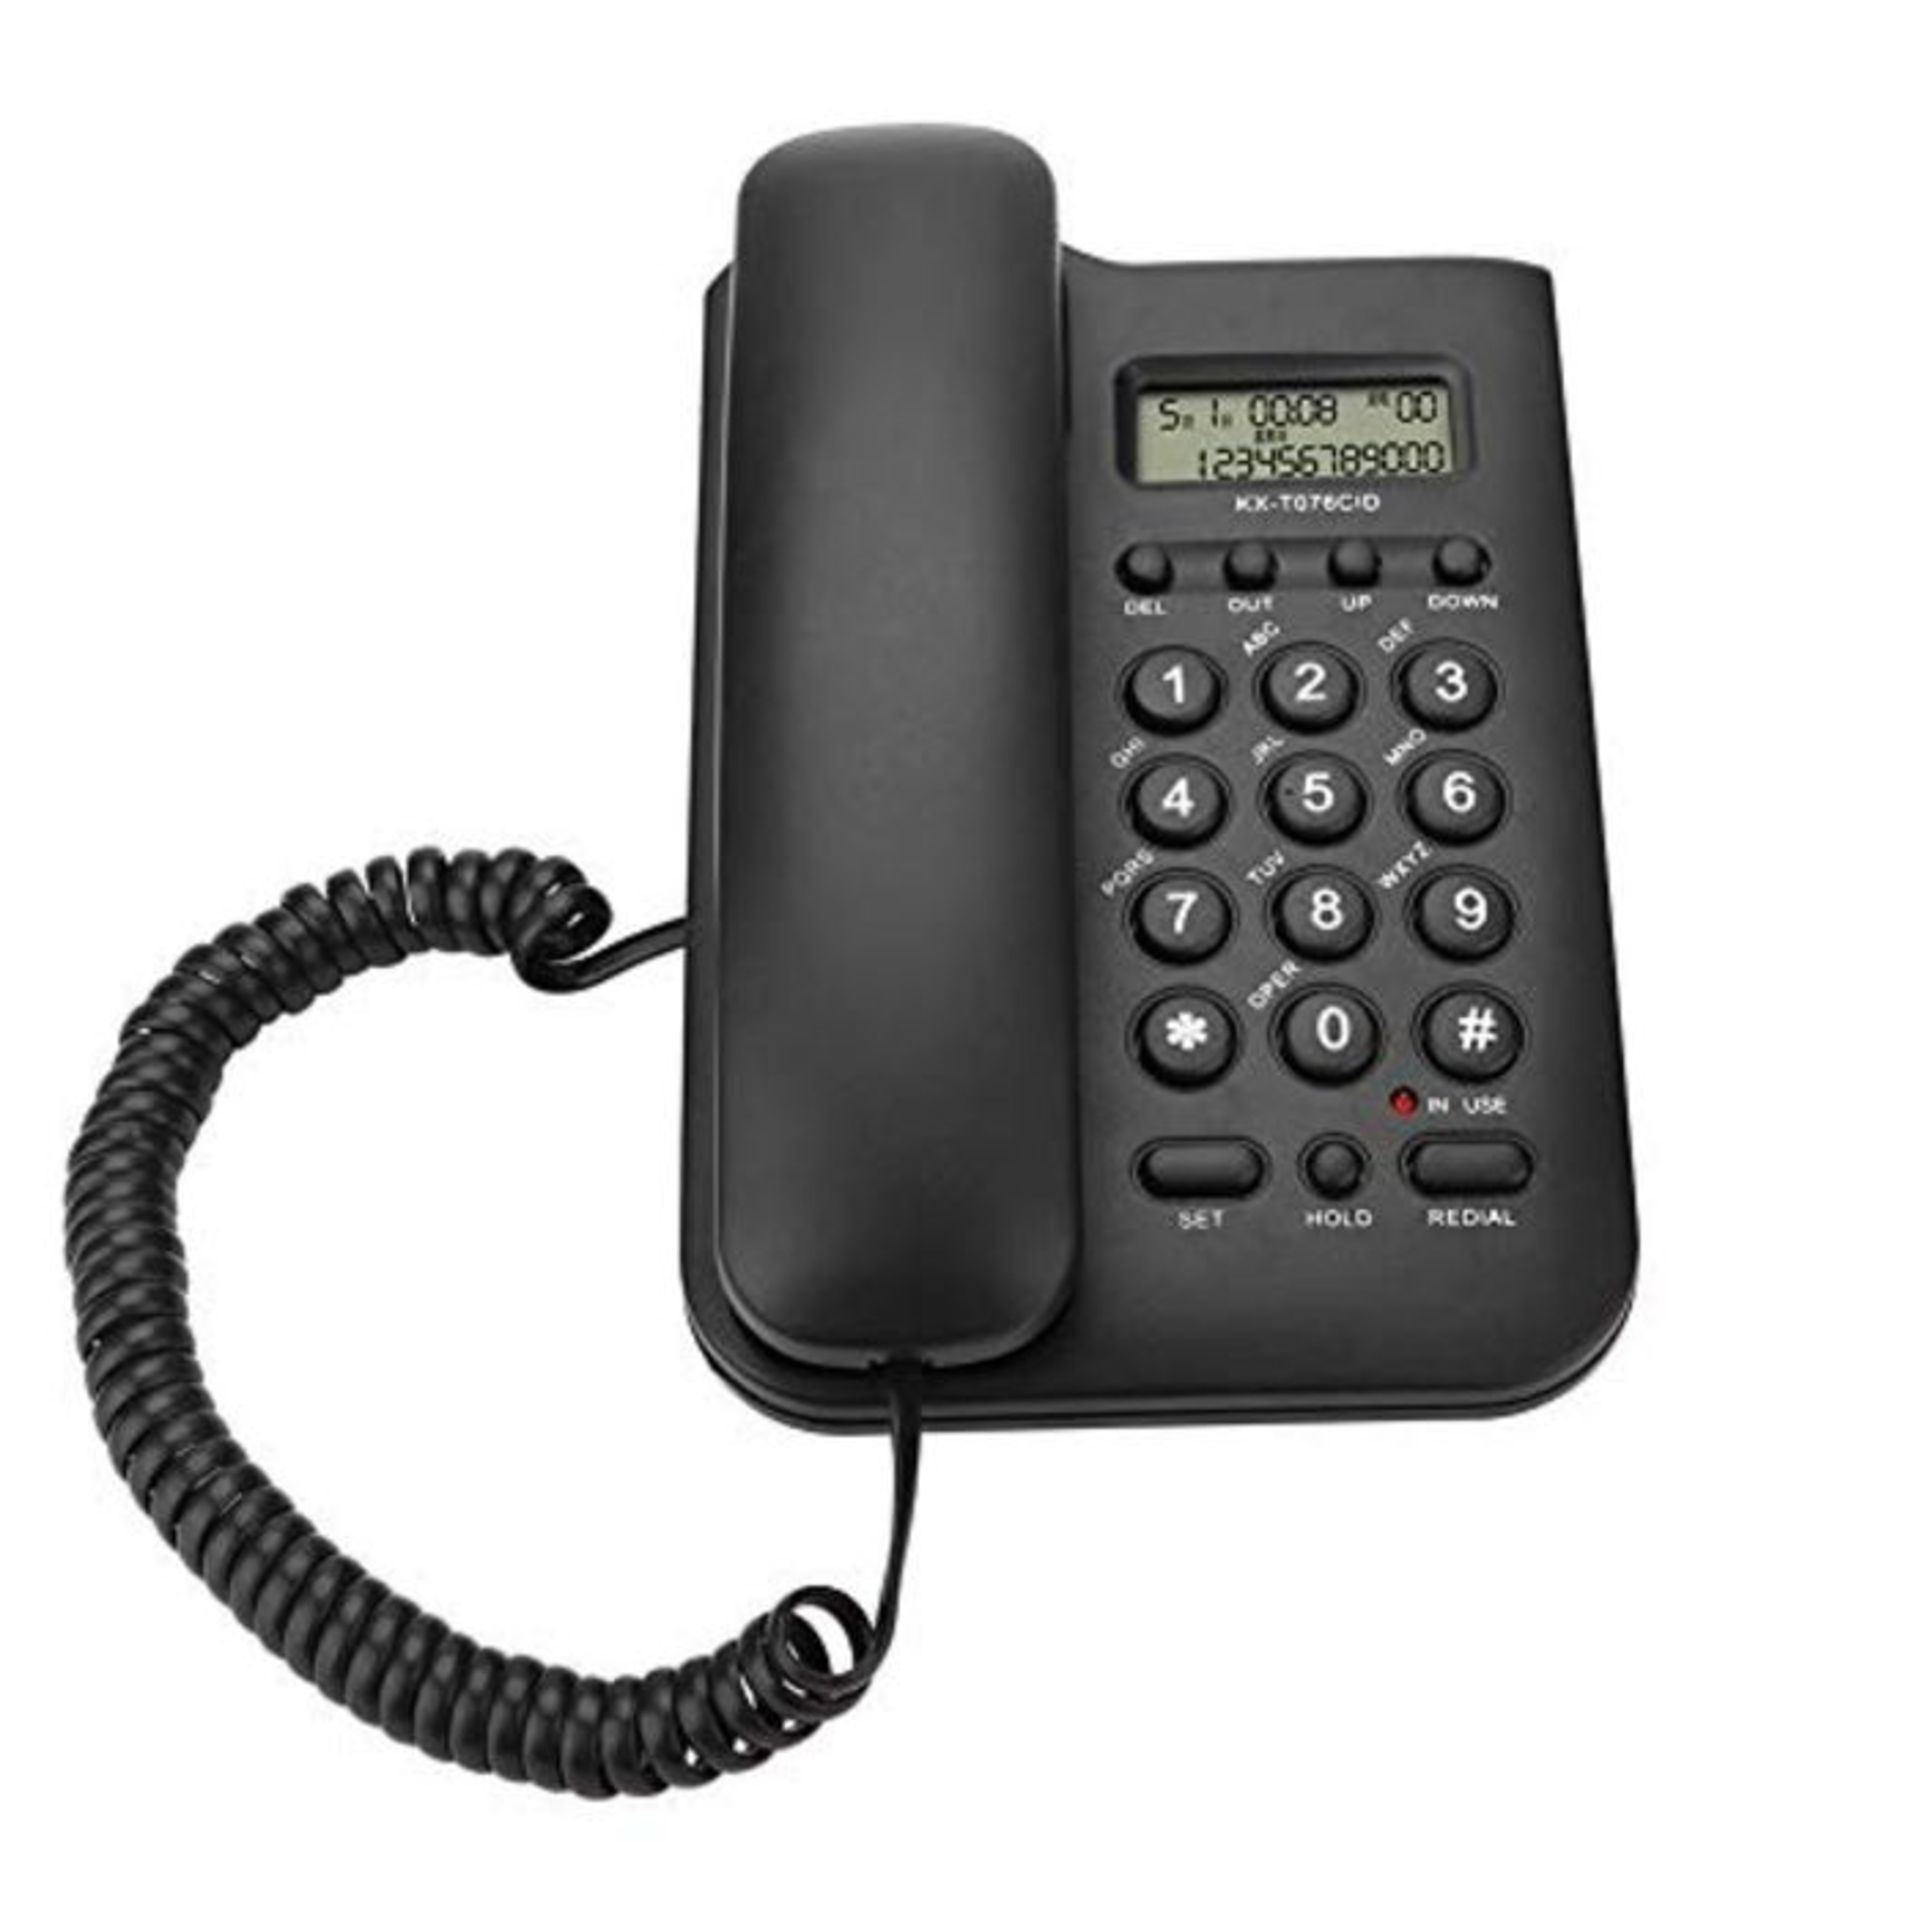 Kabelgebundenes schnurgebundenes Telefon, Festnetztelefon mit Festnetzanschluss (FSK/D